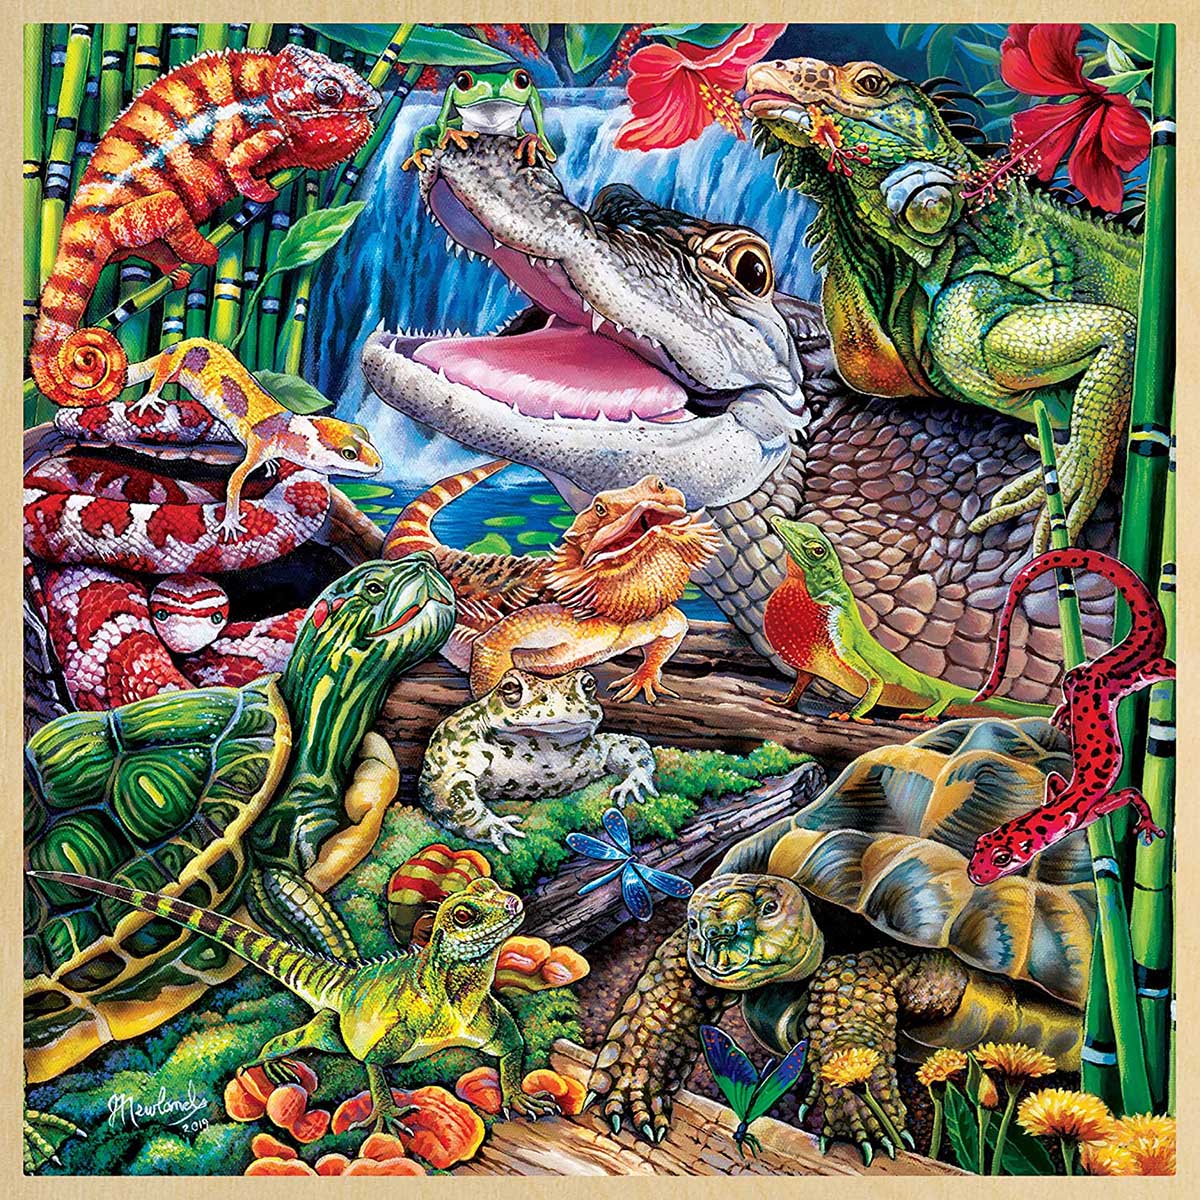 Reptile Friends Reptiles / Amphibians Wooden Jigsaw Puzzle